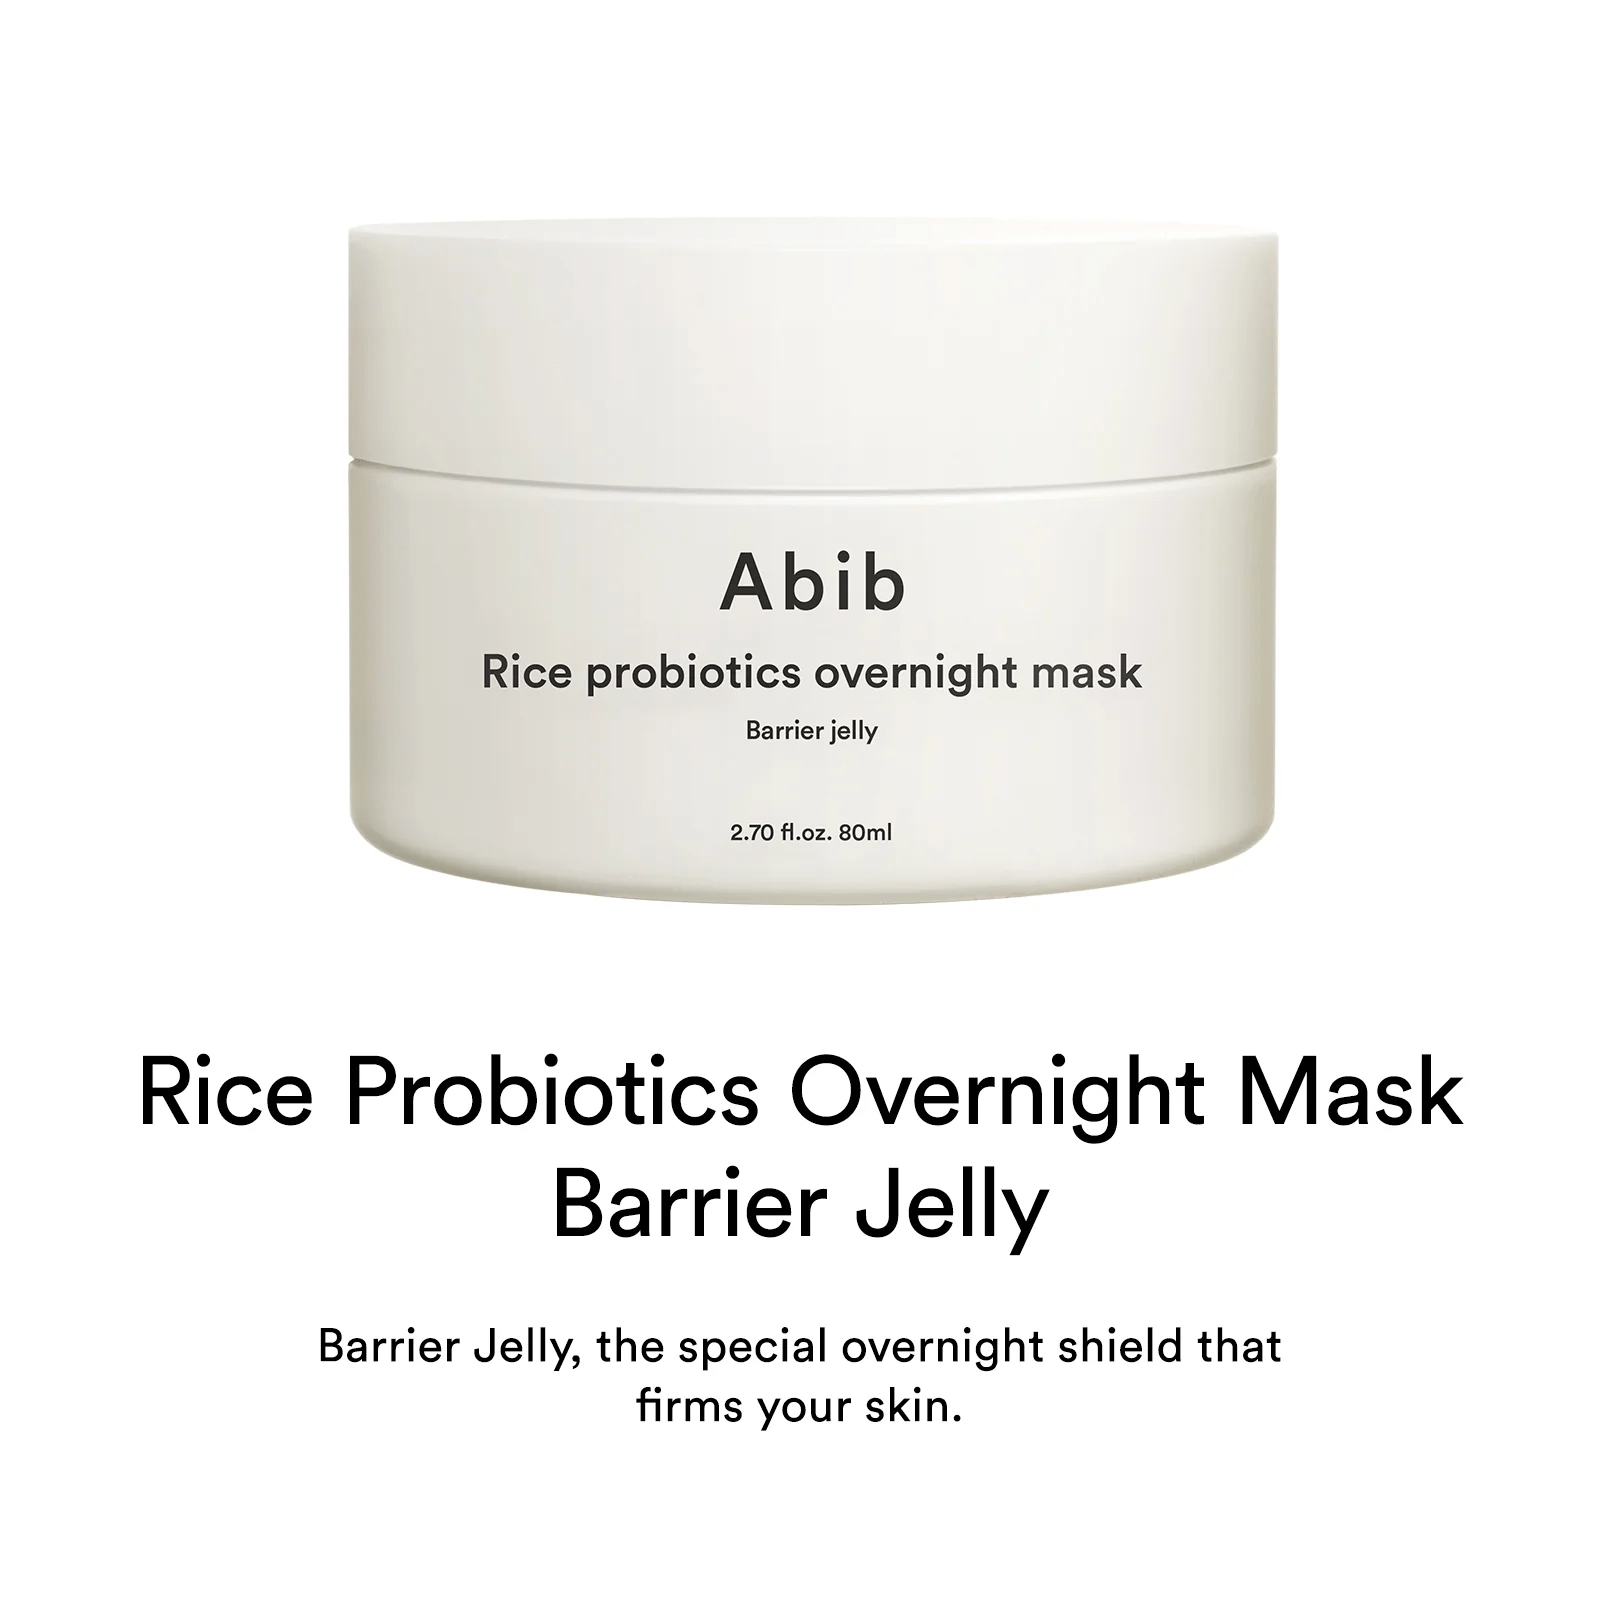 skincare-kbeauty-glowtime-abib rice probiotics overnight mask